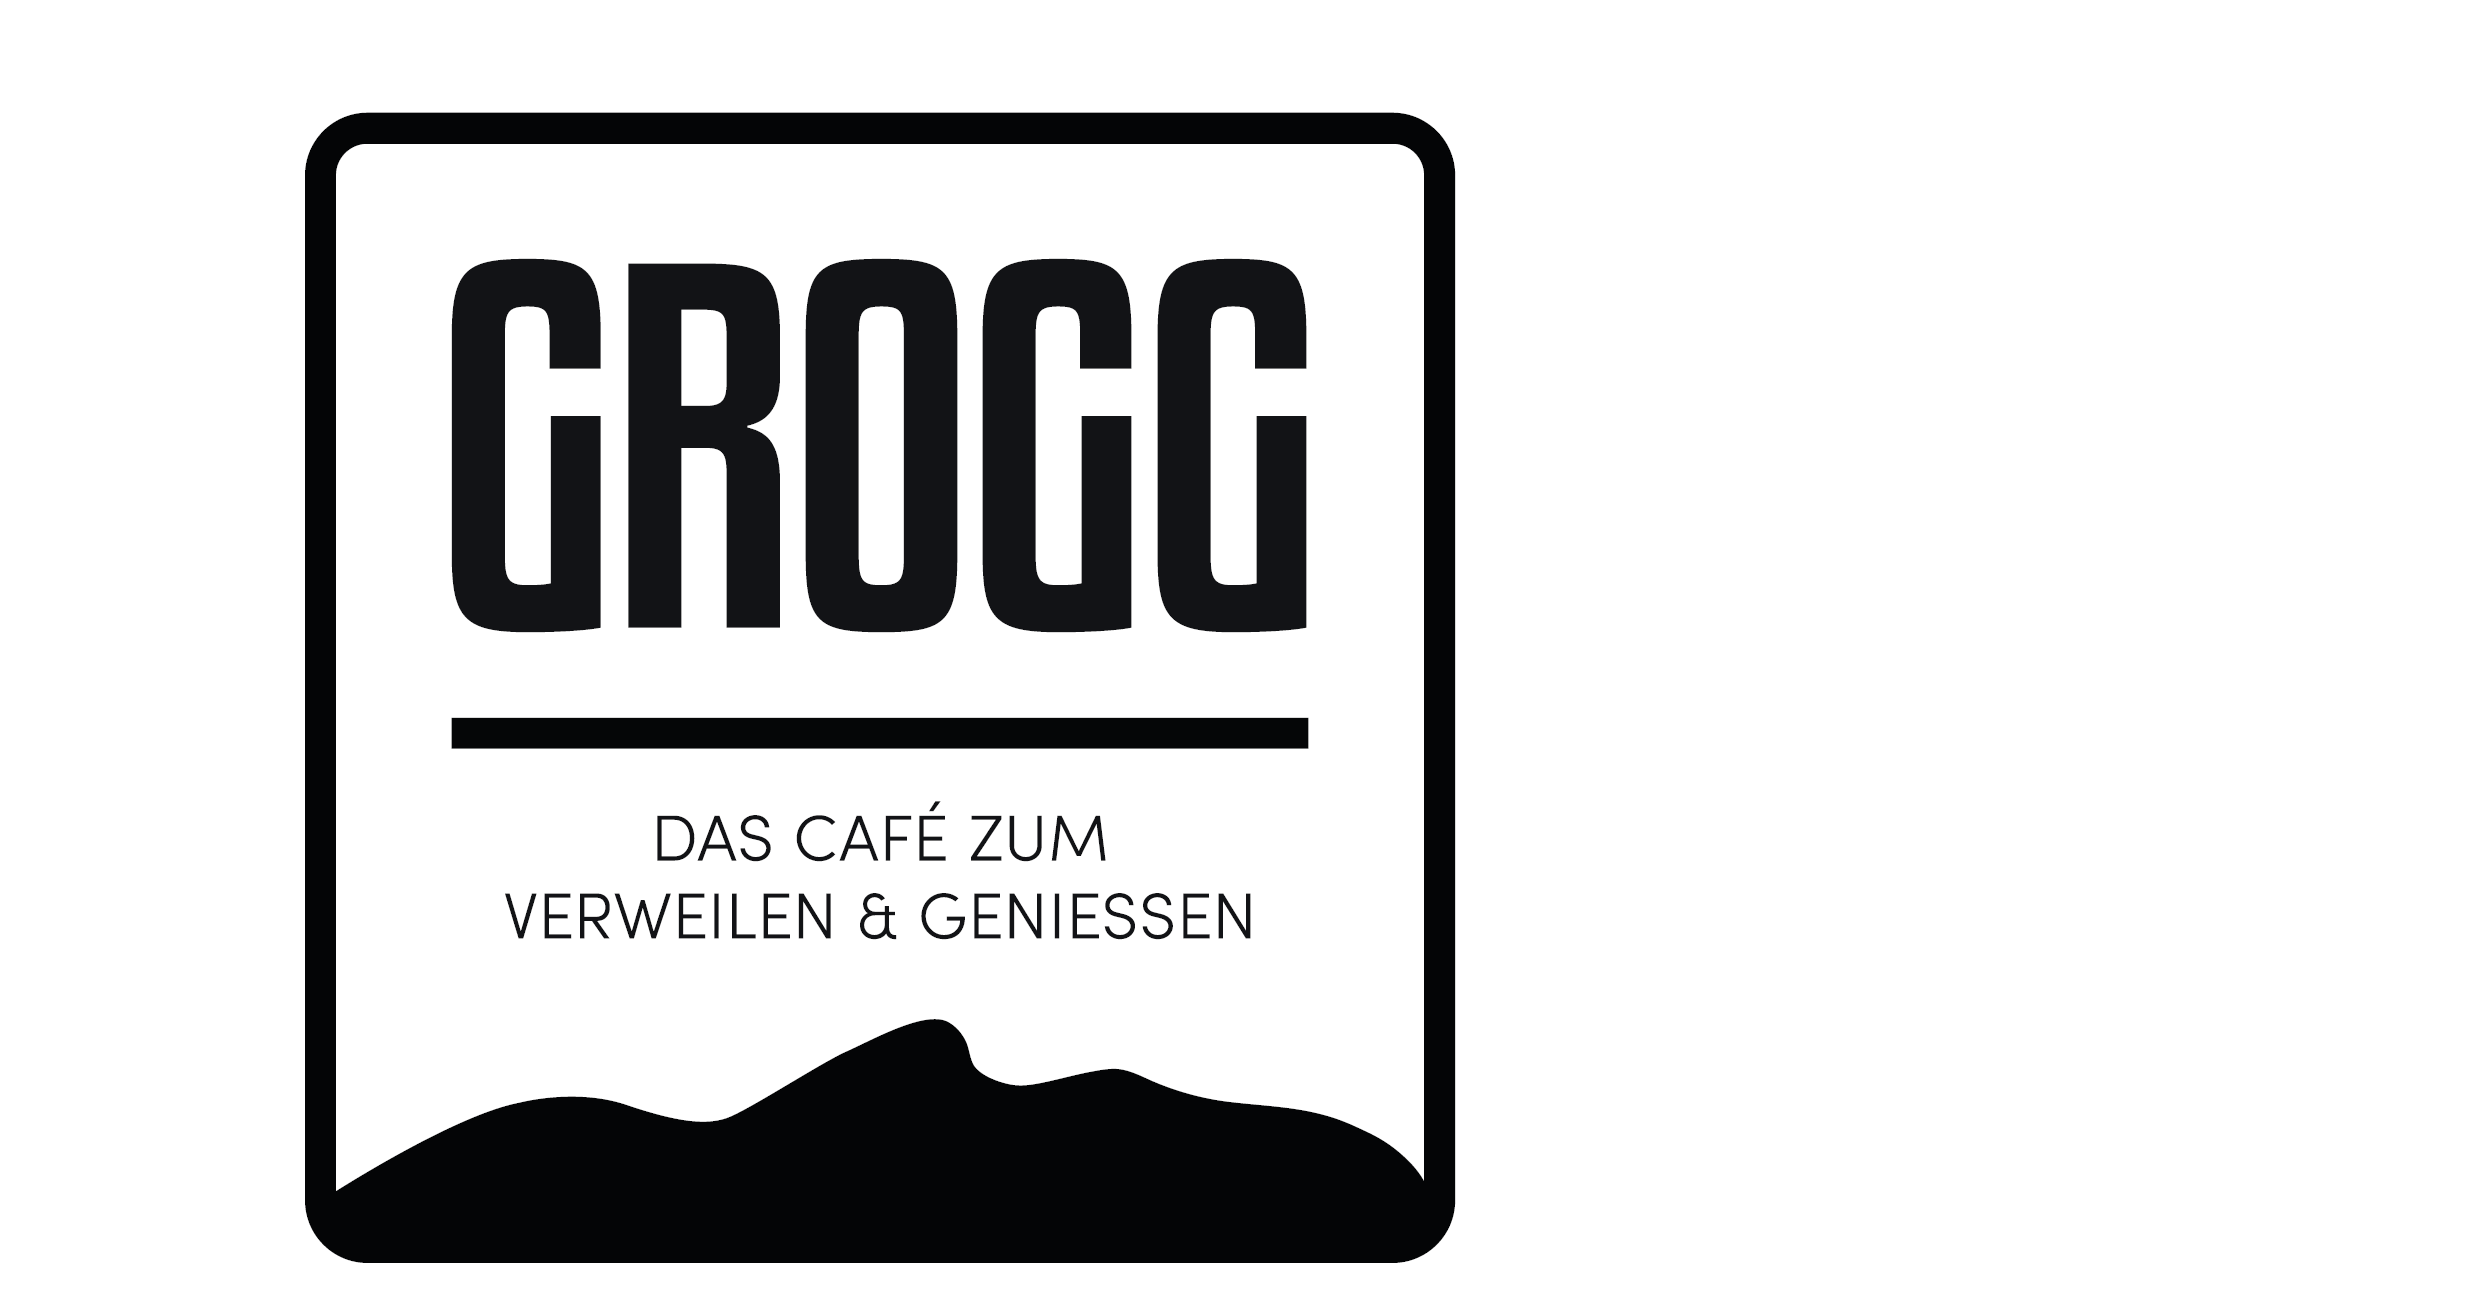 Caf Bar Grogg